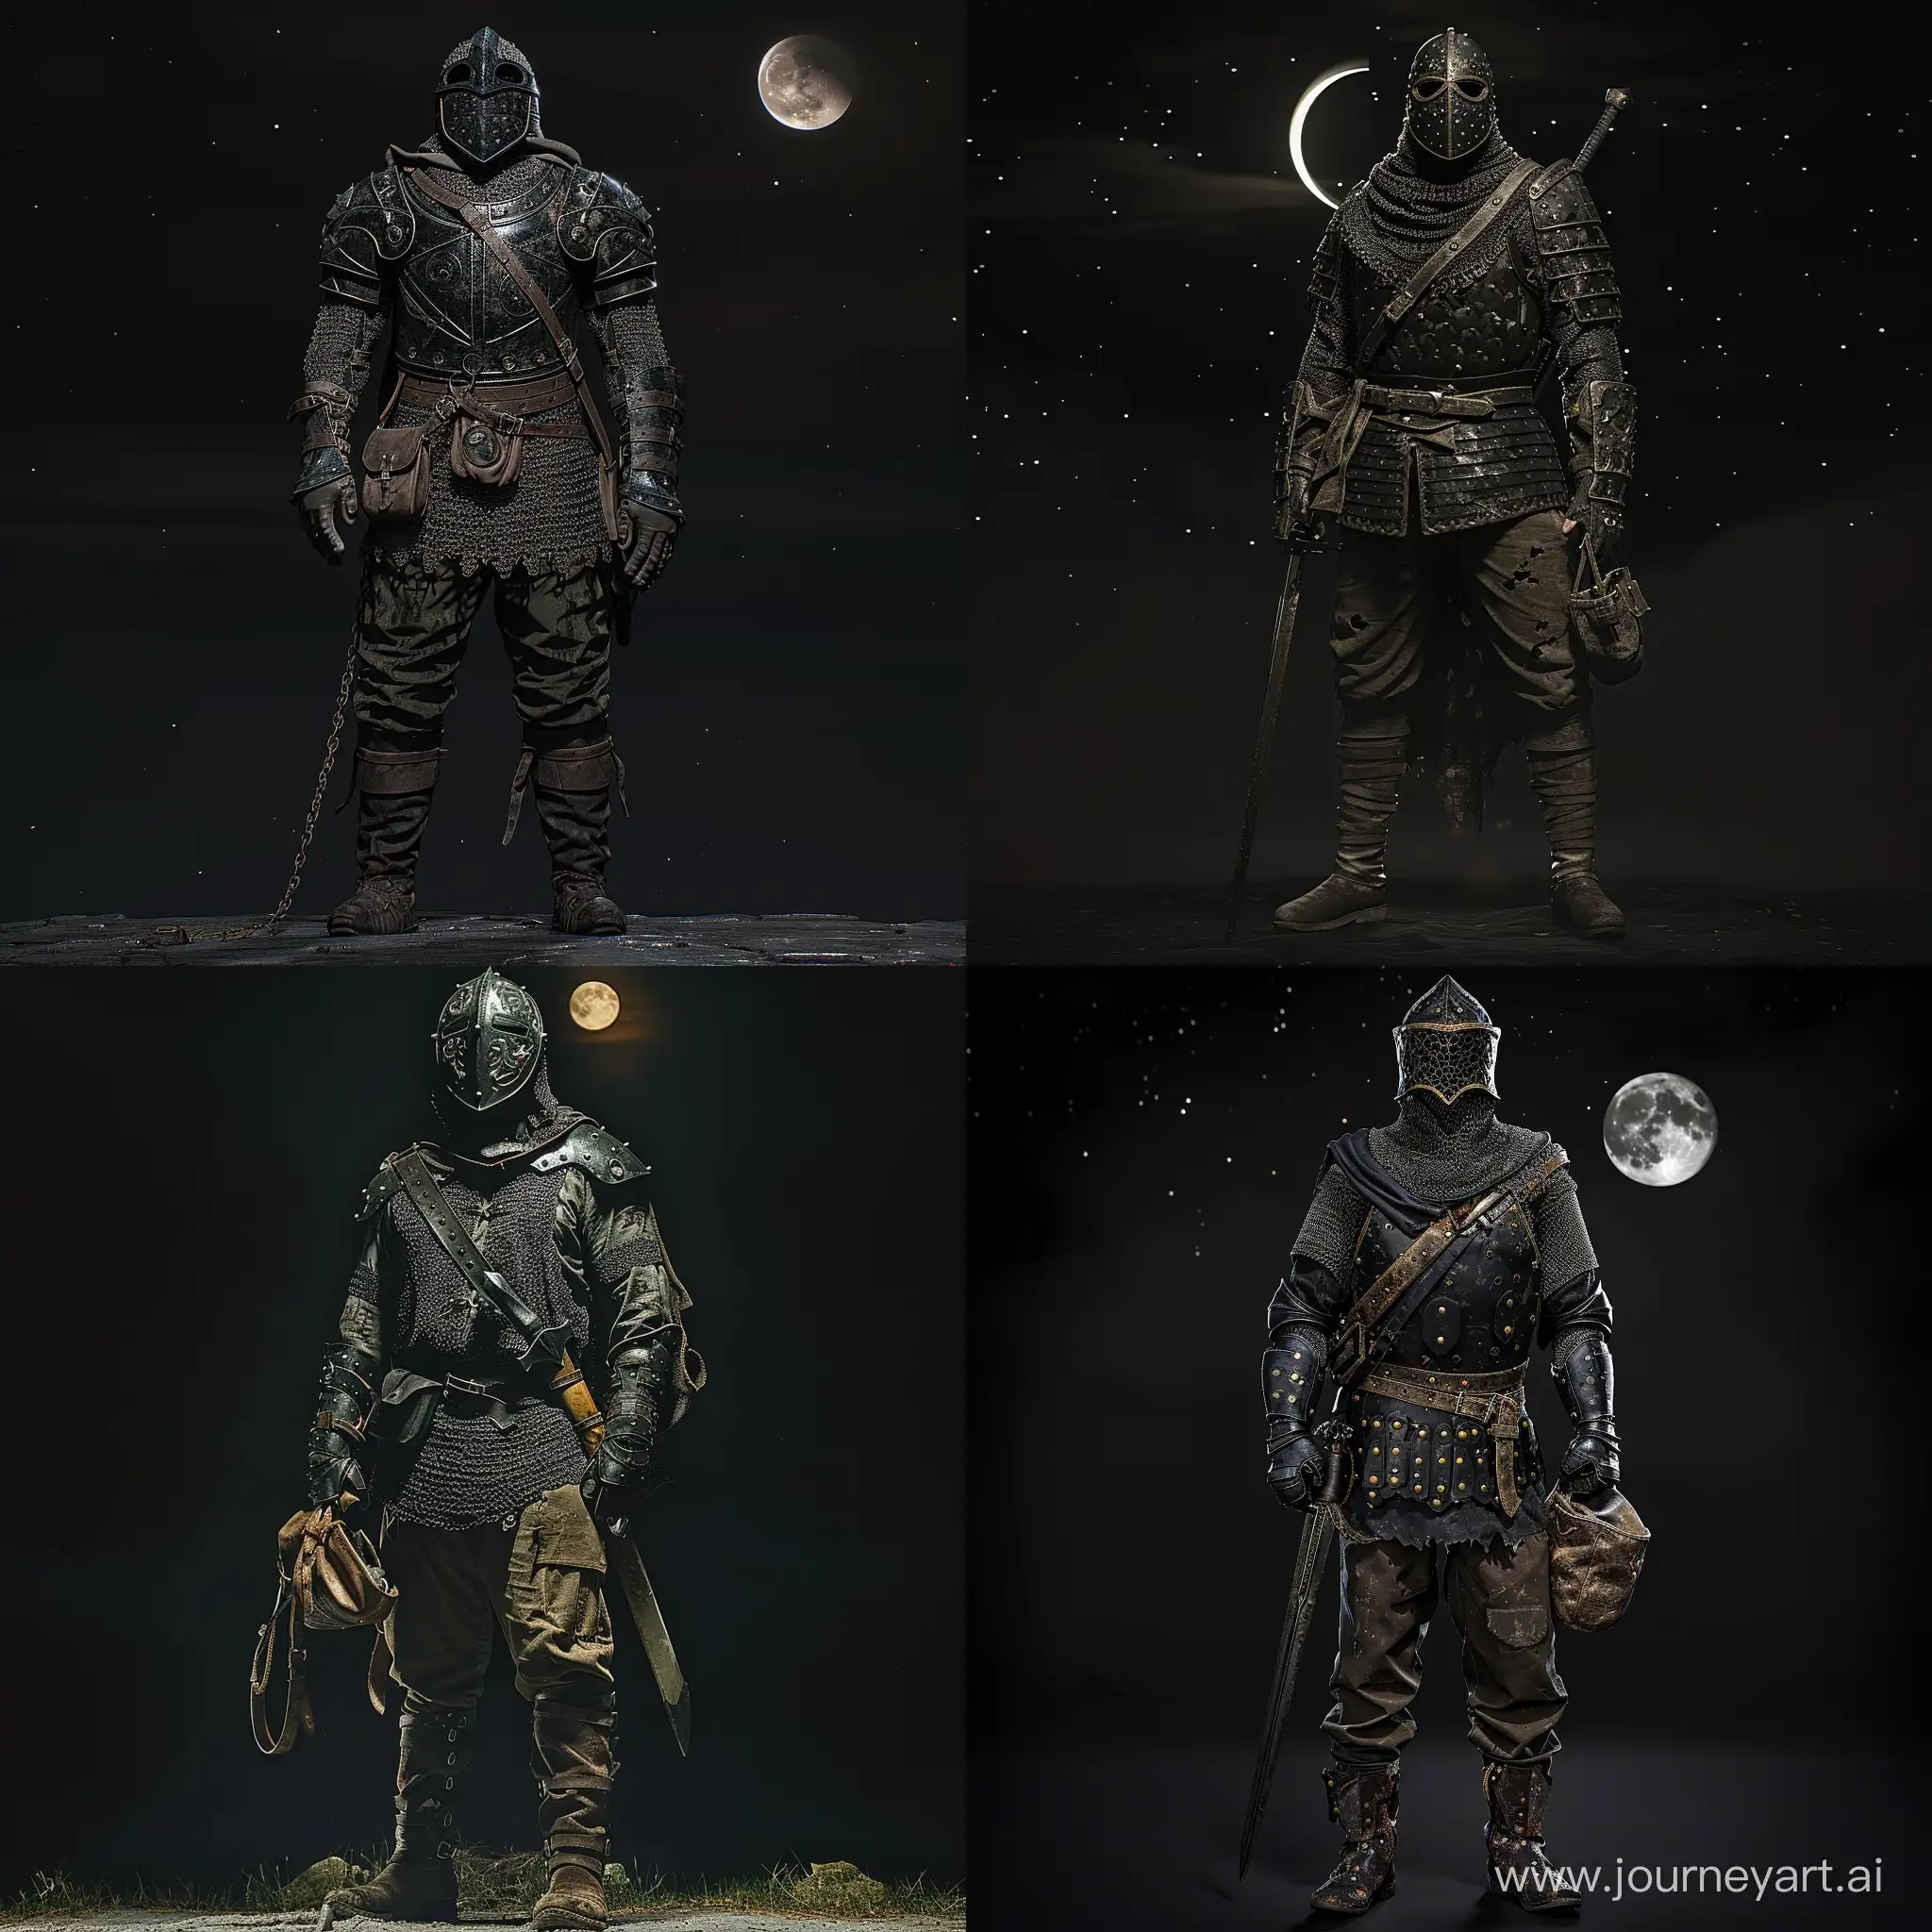 Gritty-Vintage-Knight-Standing-Under-Moonlight-in-Dark-Armor